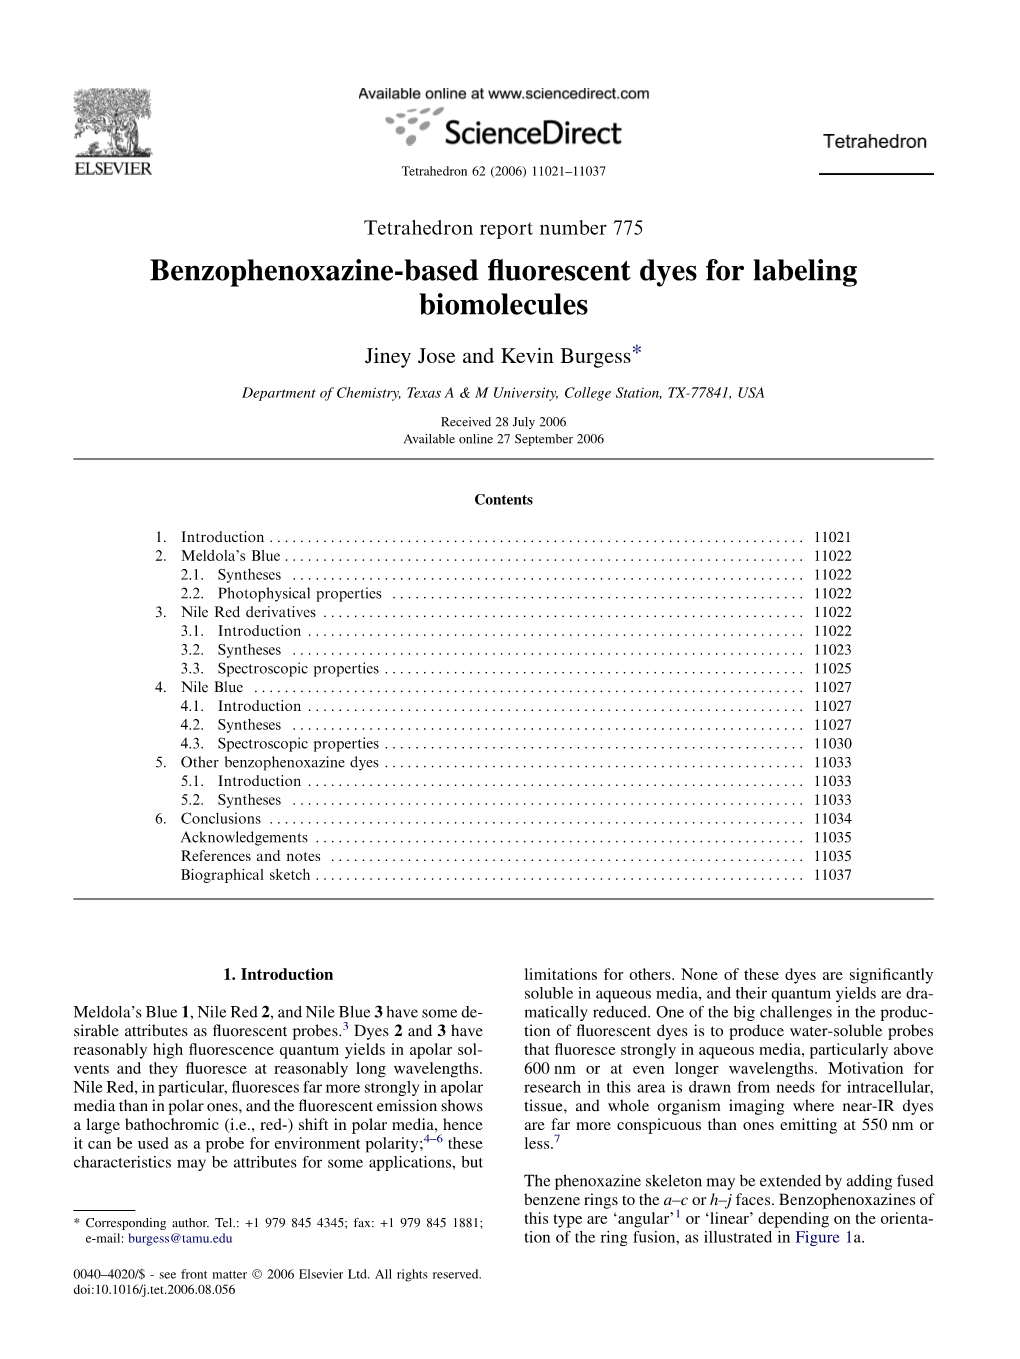 Benzophenoxazine-Based Fluorescent Dyes for Labeling Biomolecules